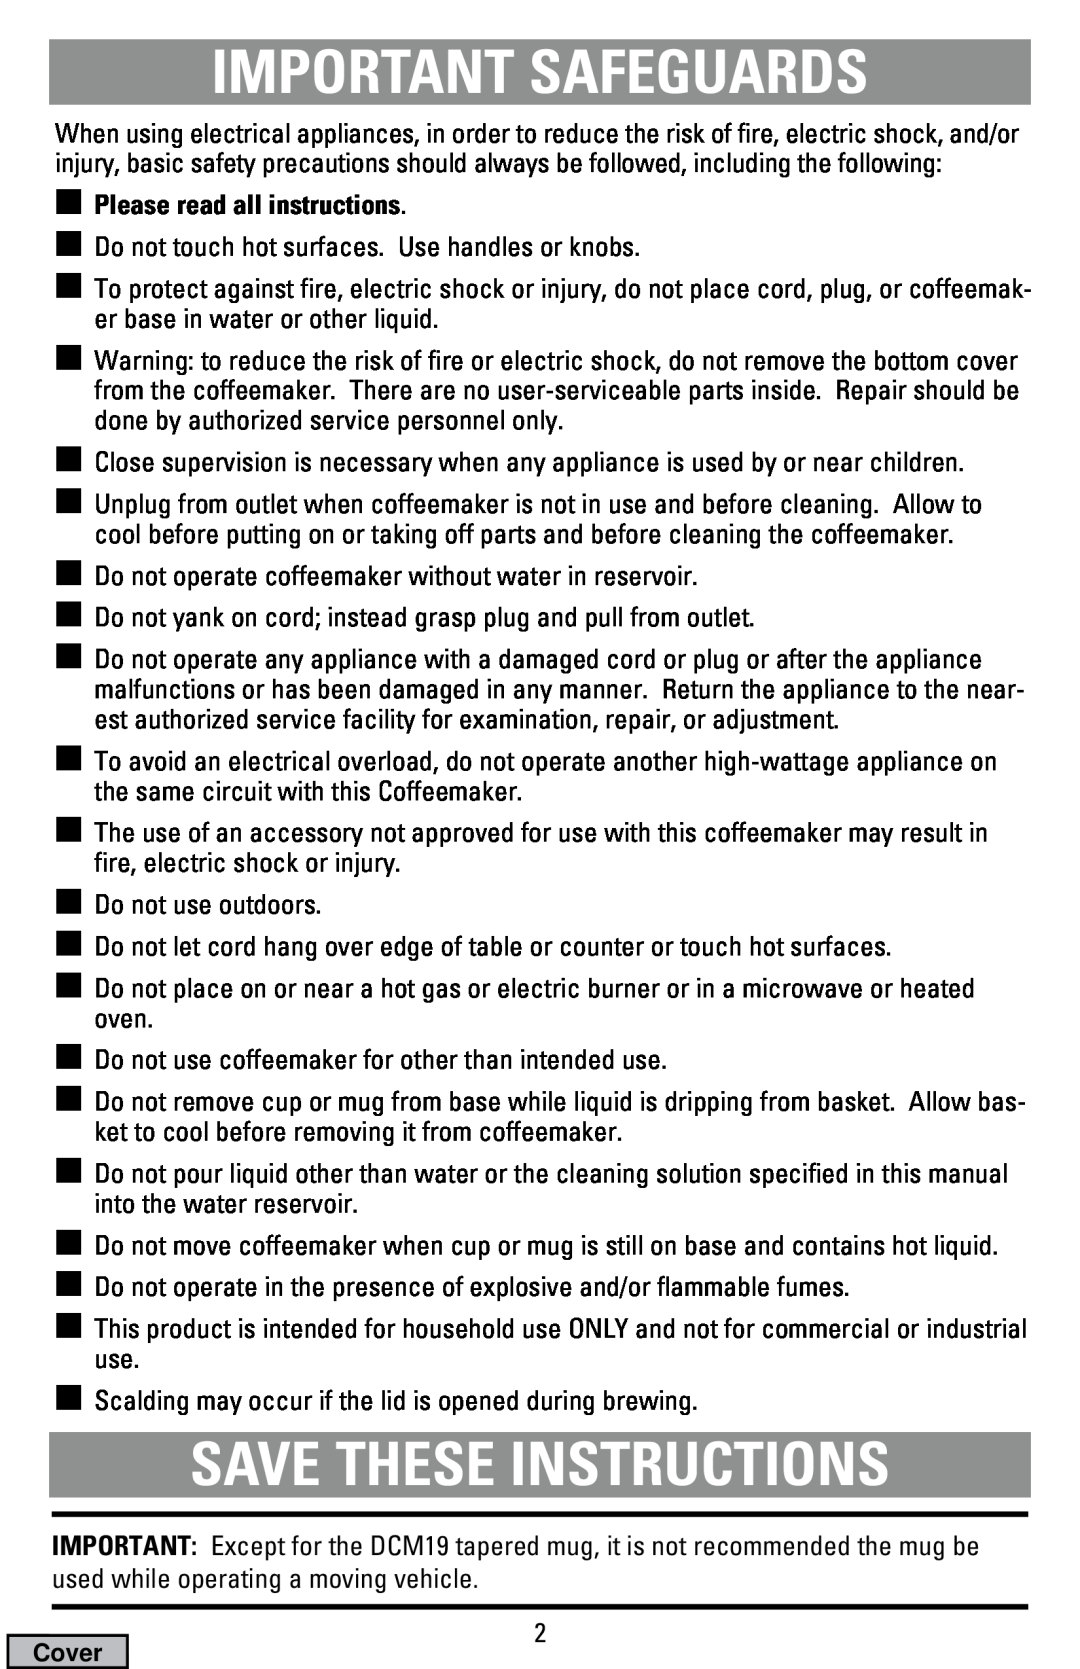 Black & Decker DCM19, DCM16 manual Important Safeguards, Save These Instructions, Please read all instructions 